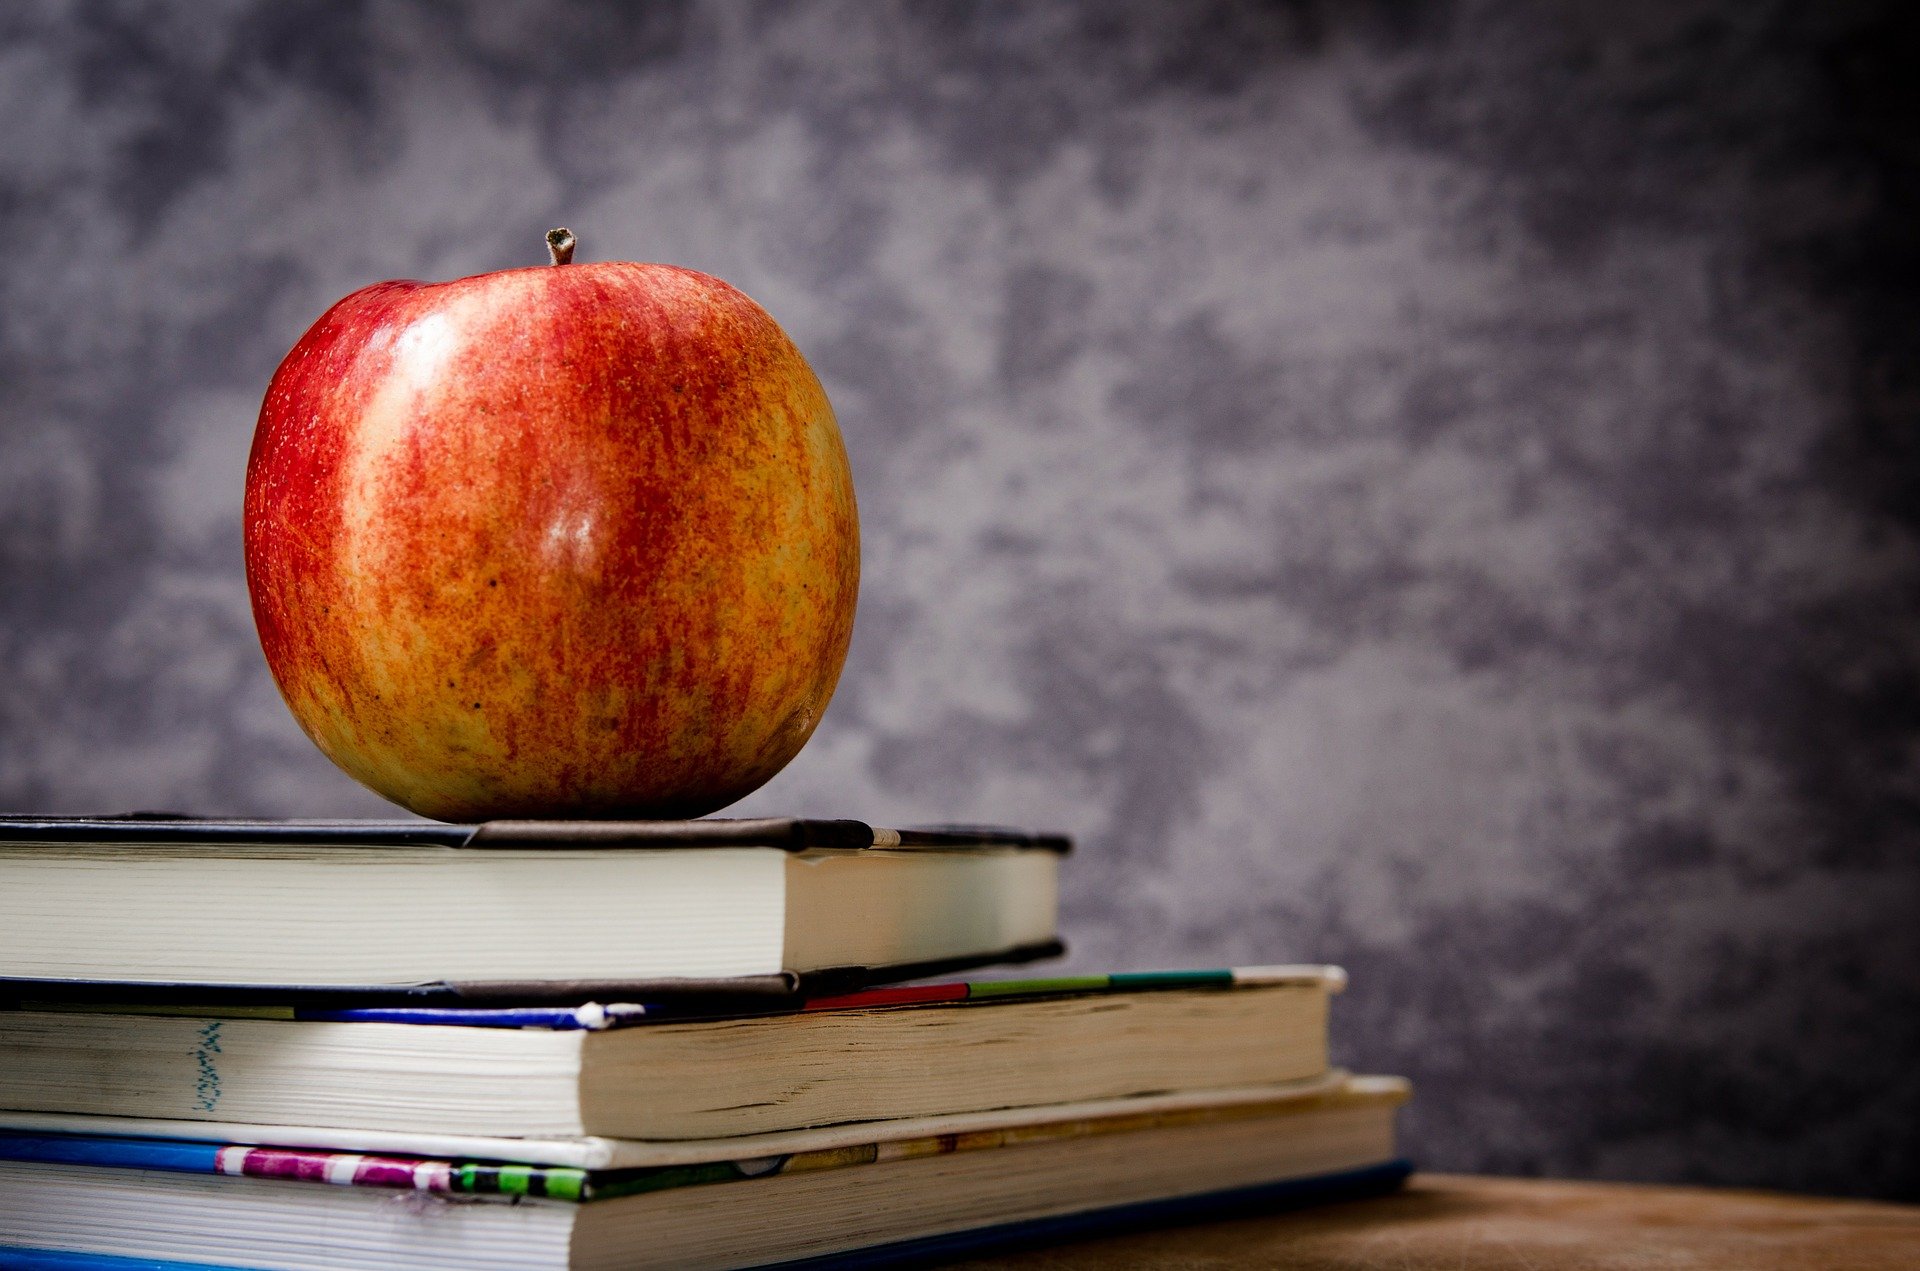 A red apple balanced on a pile of books. | Photo: Pixabay/Michal Jarmoluk